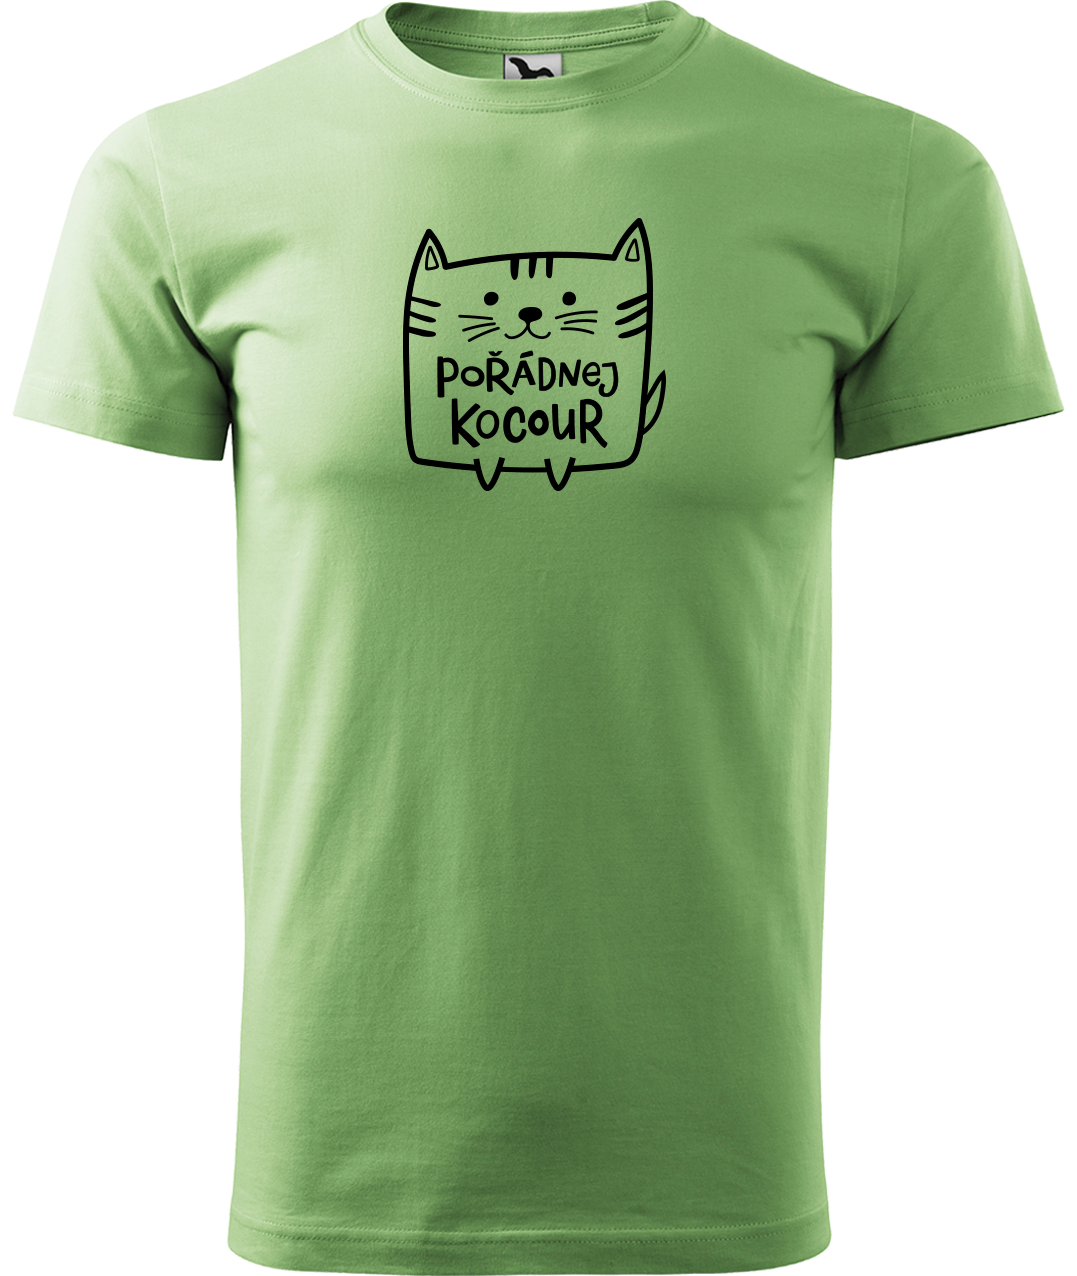 Pánské tričko s kočkou - Pořádnej kocour Velikost: XL, Barva: Apple Green (92)